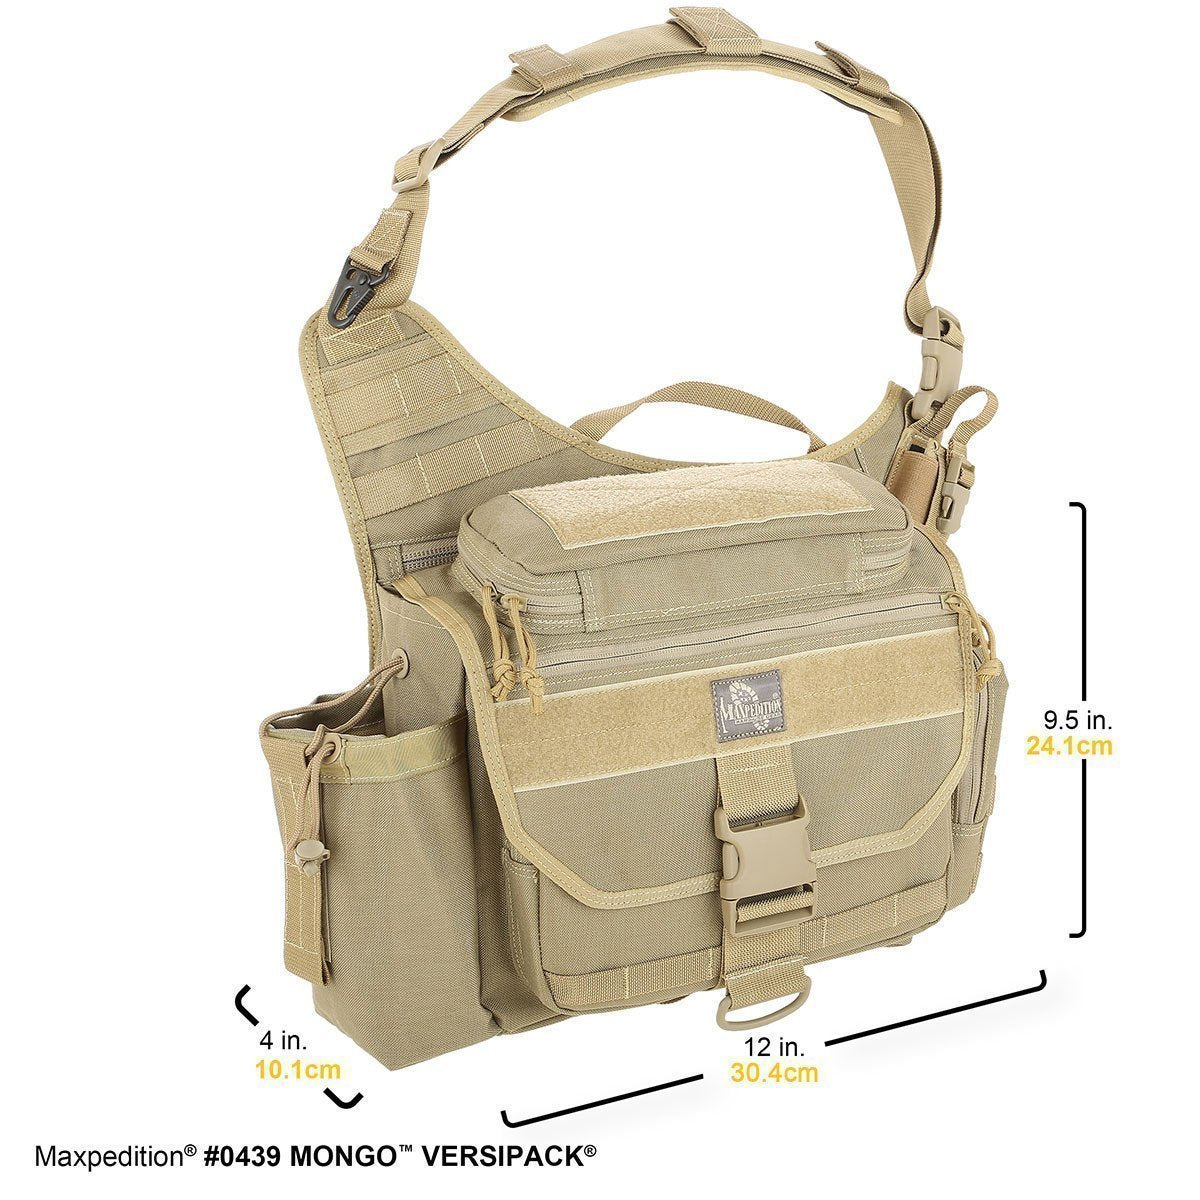 Maxpedition Mongo Versipack Sling Packs Maxpedition Khaki Tactical Gear Supplier Tactical Distributors Australia